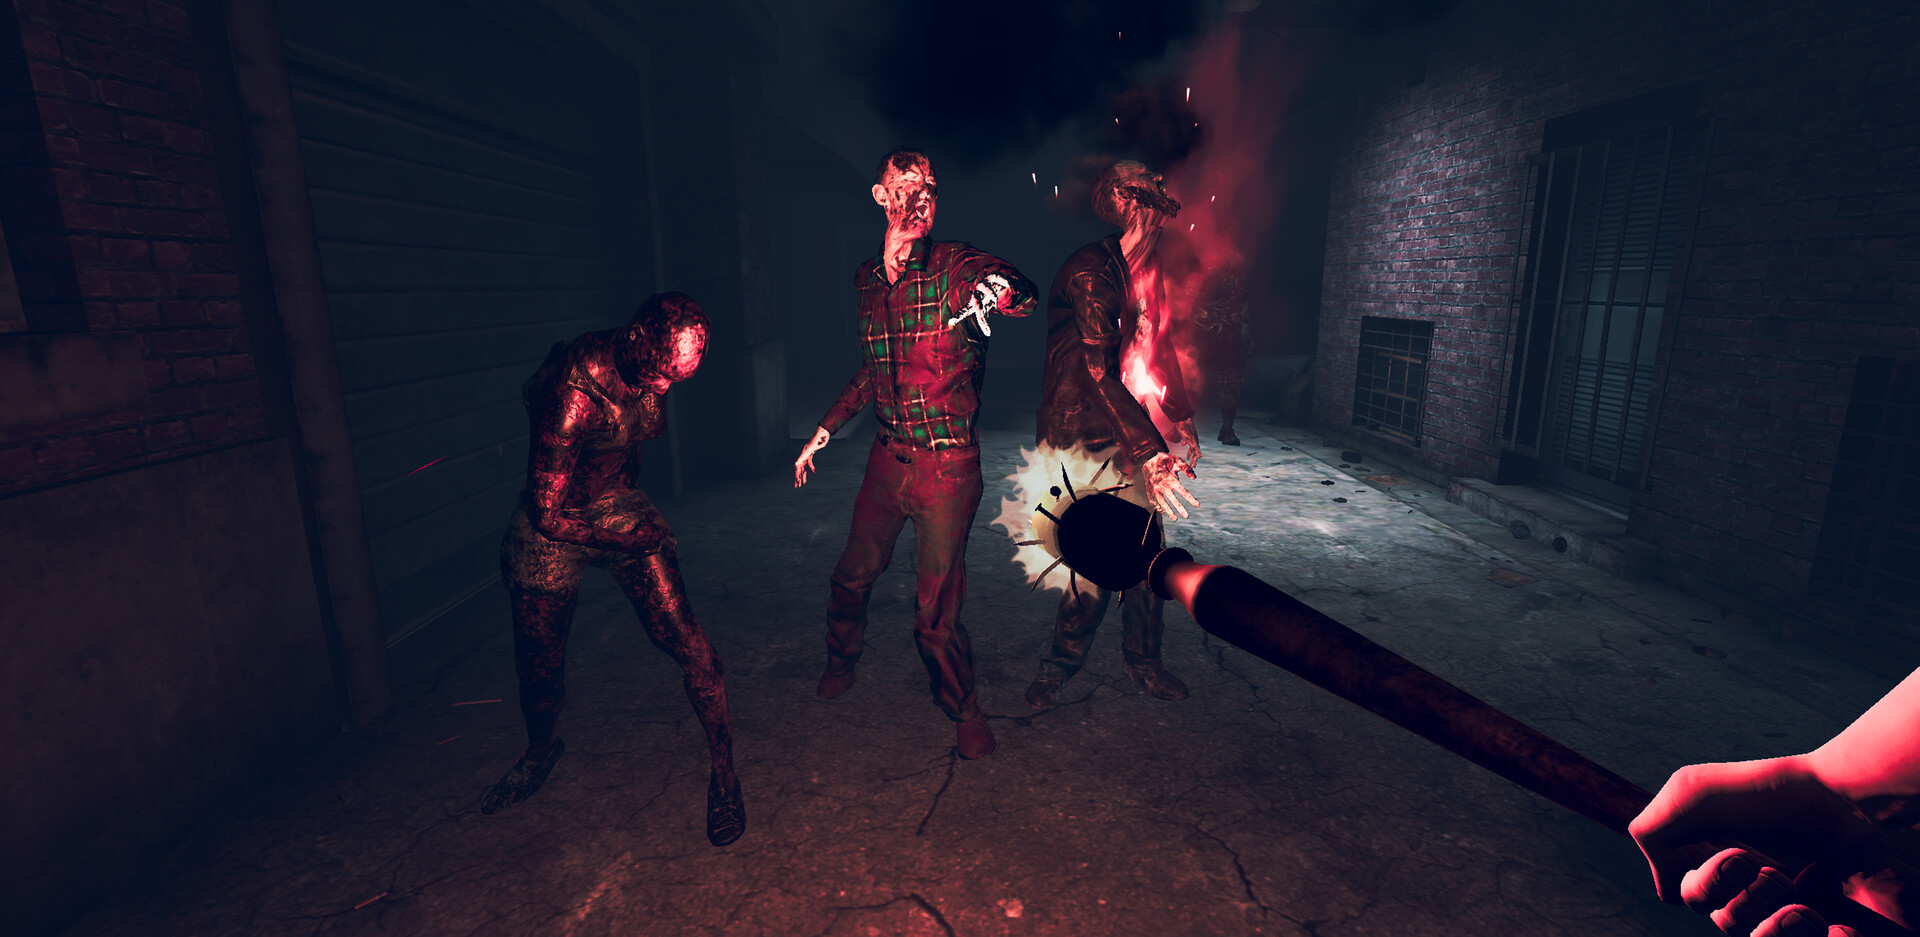 Horror Adventure : Zombie Edition VR Steam CD Key